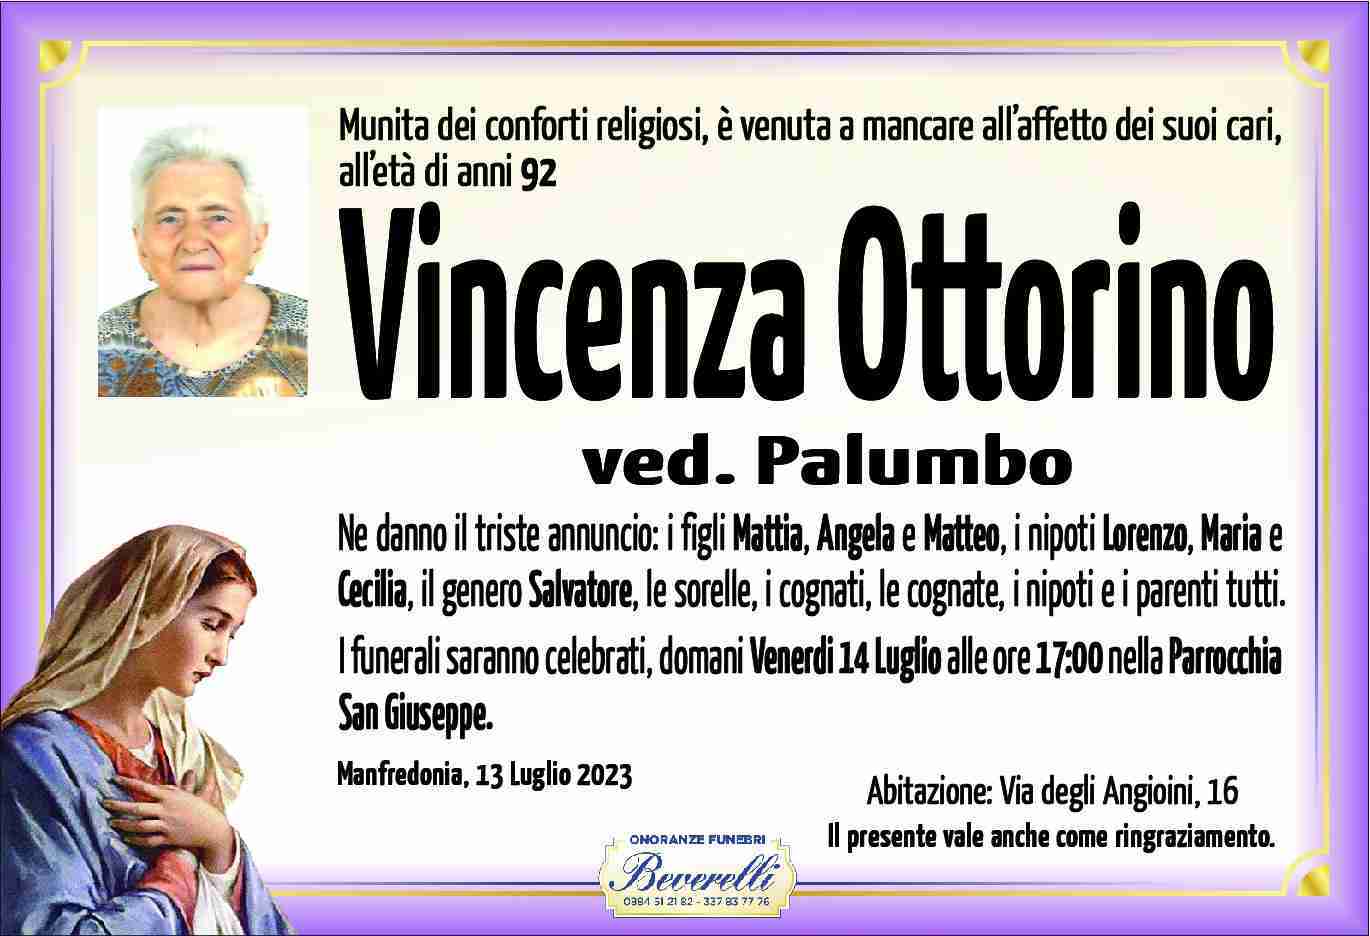 Vincenza Ottorino